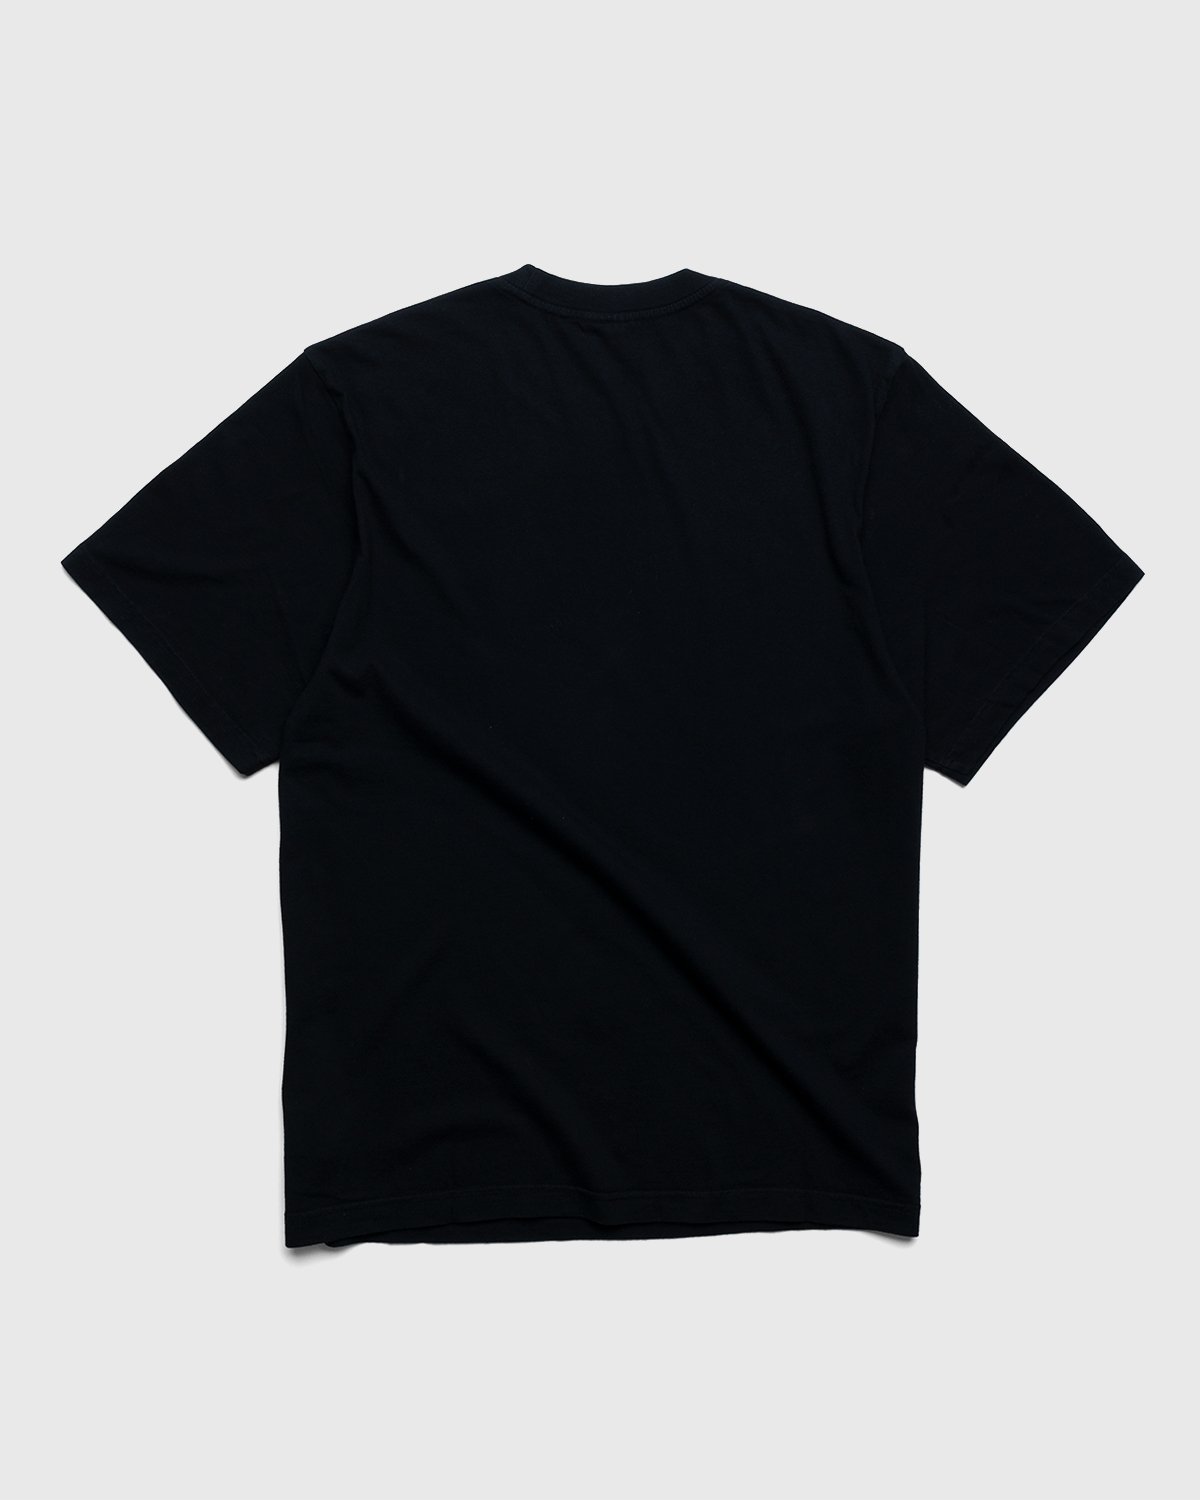 Noon Goons - Sister City T-Shirt Black - Clothing - Black - Image 2